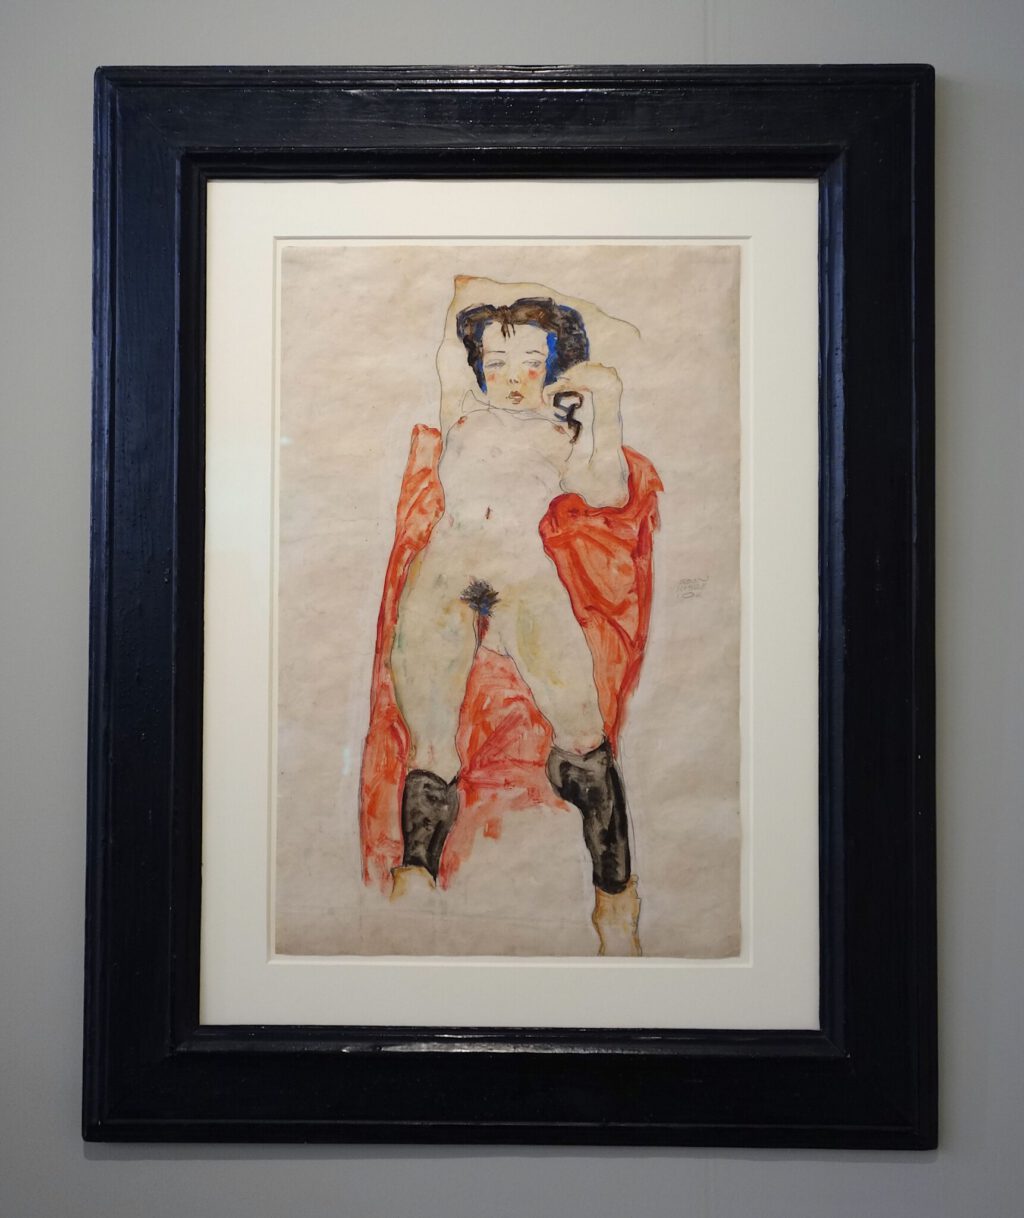 Egon Schiele Reclining Female Nude in Black Stockings 1911 Watercolour on paper